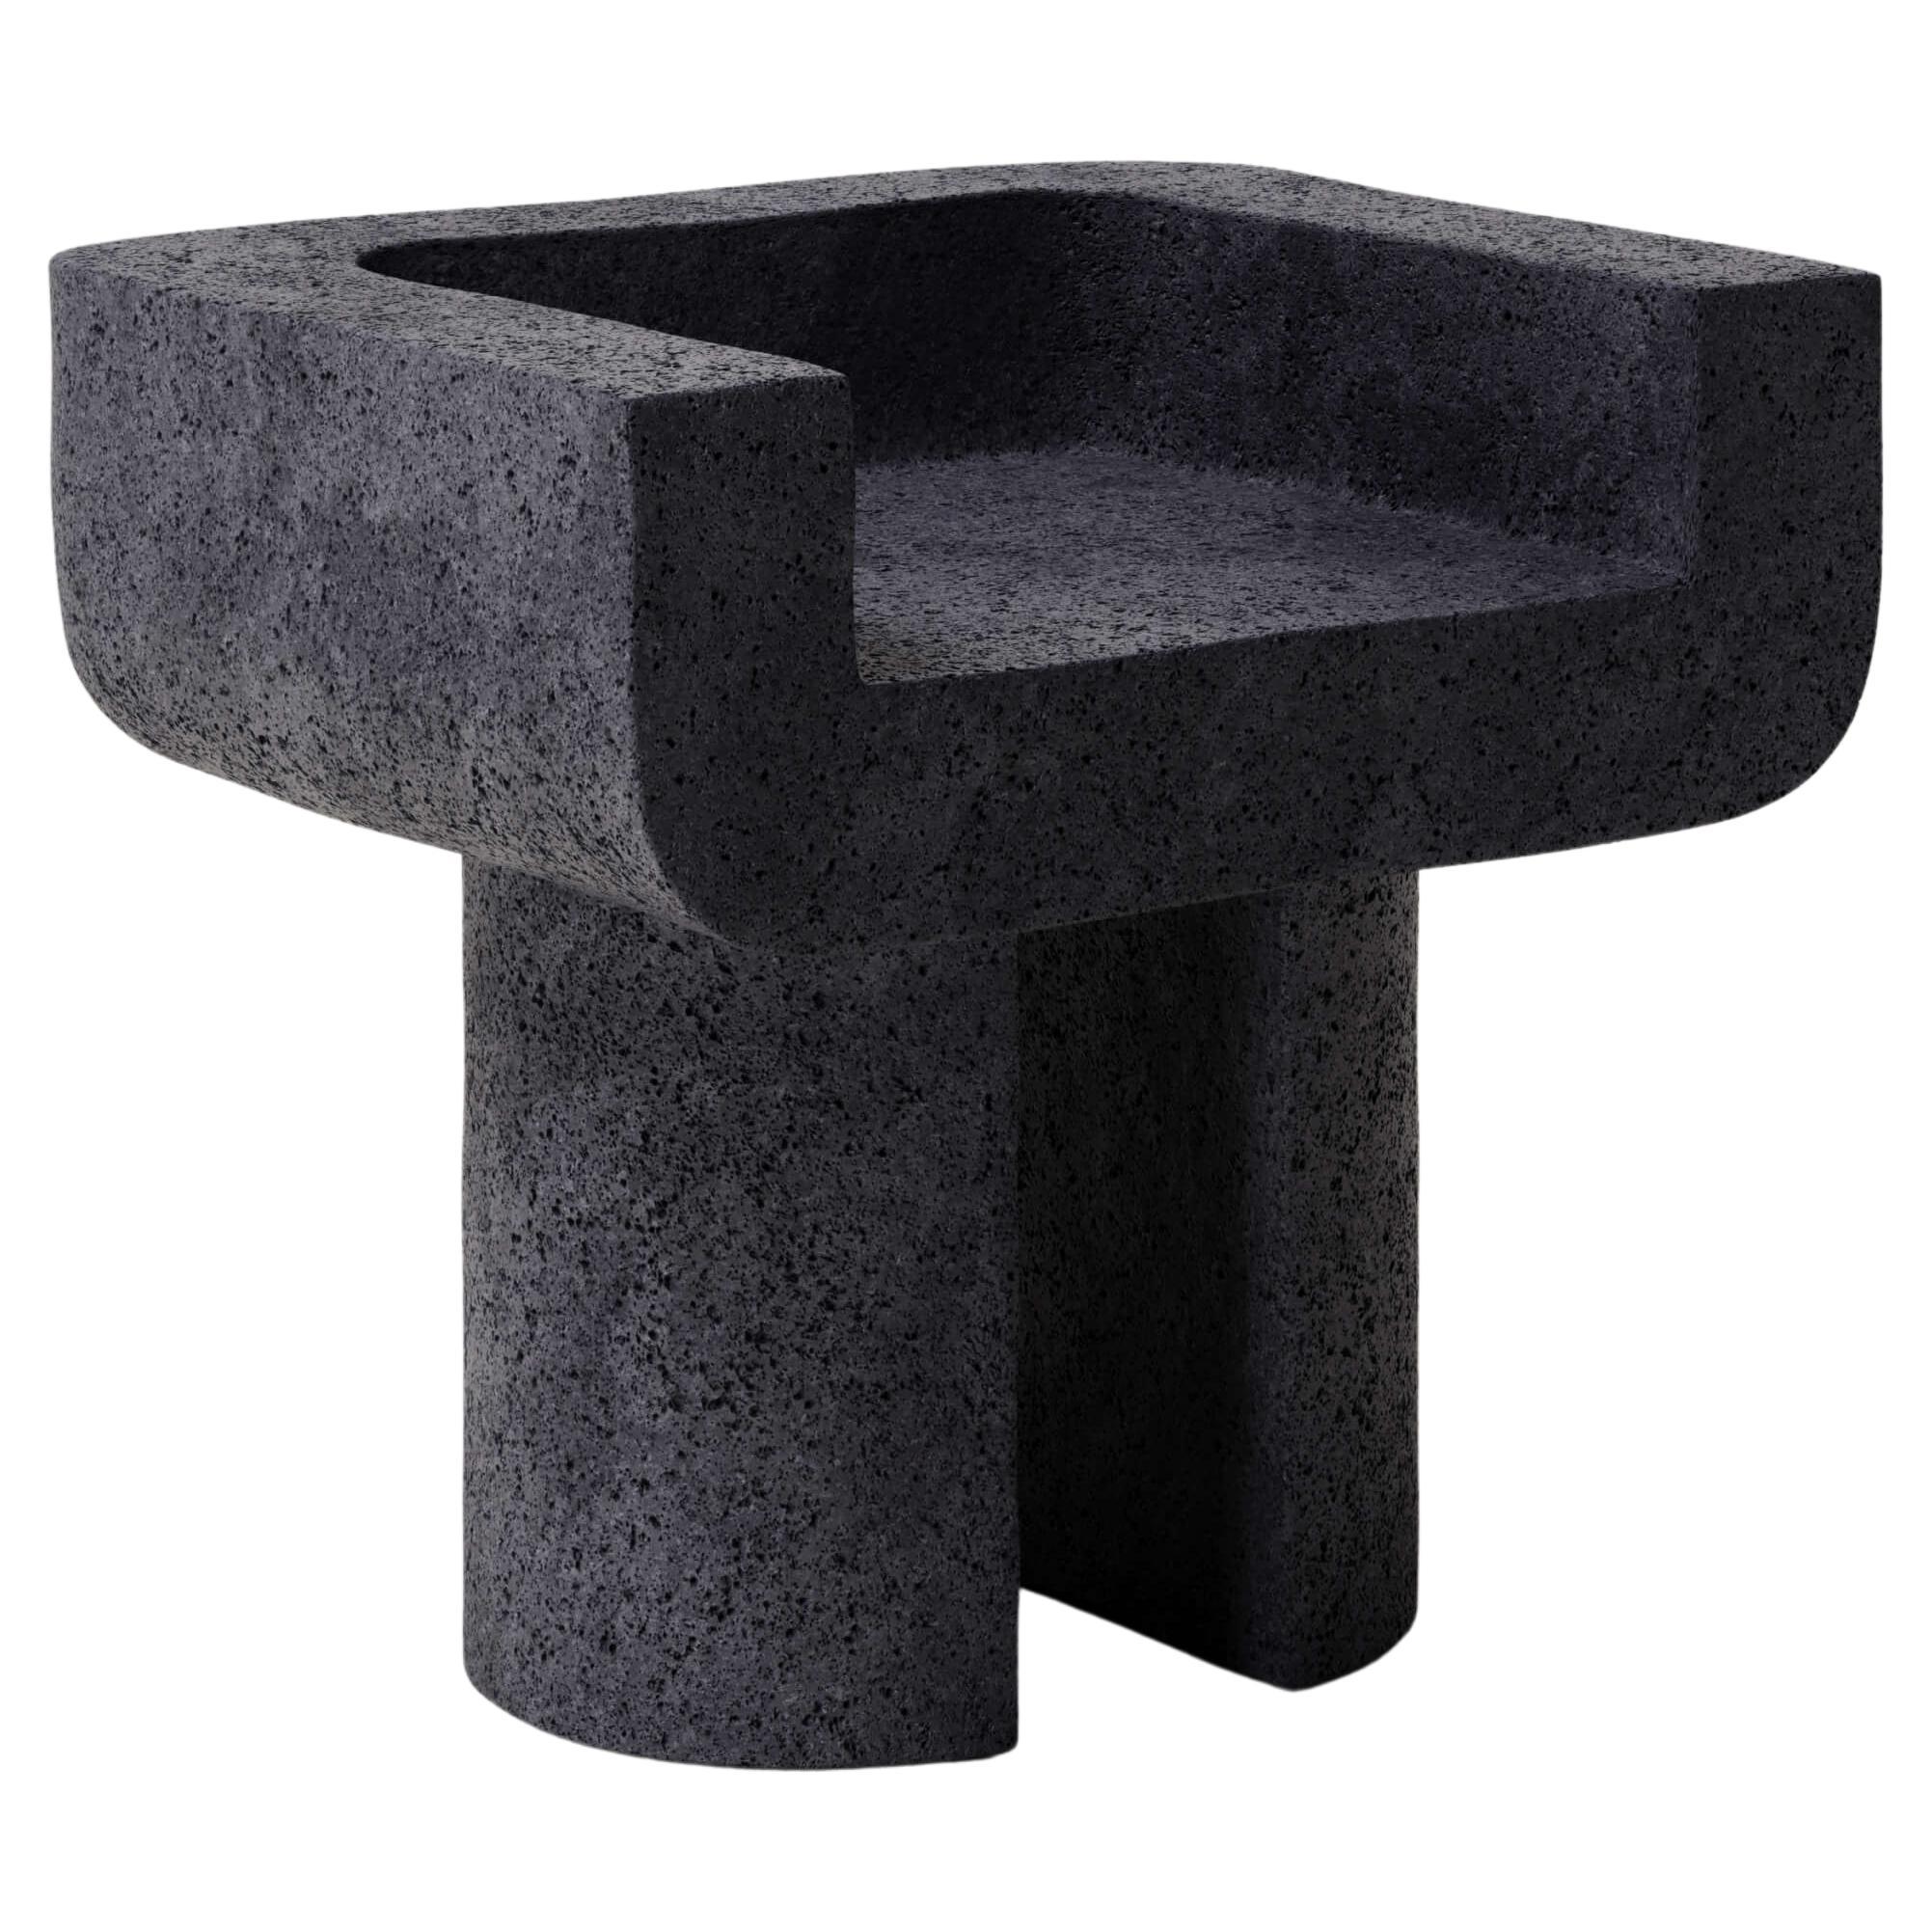 M_001 Chair by Monolith Studio, Lava Rock For Sale